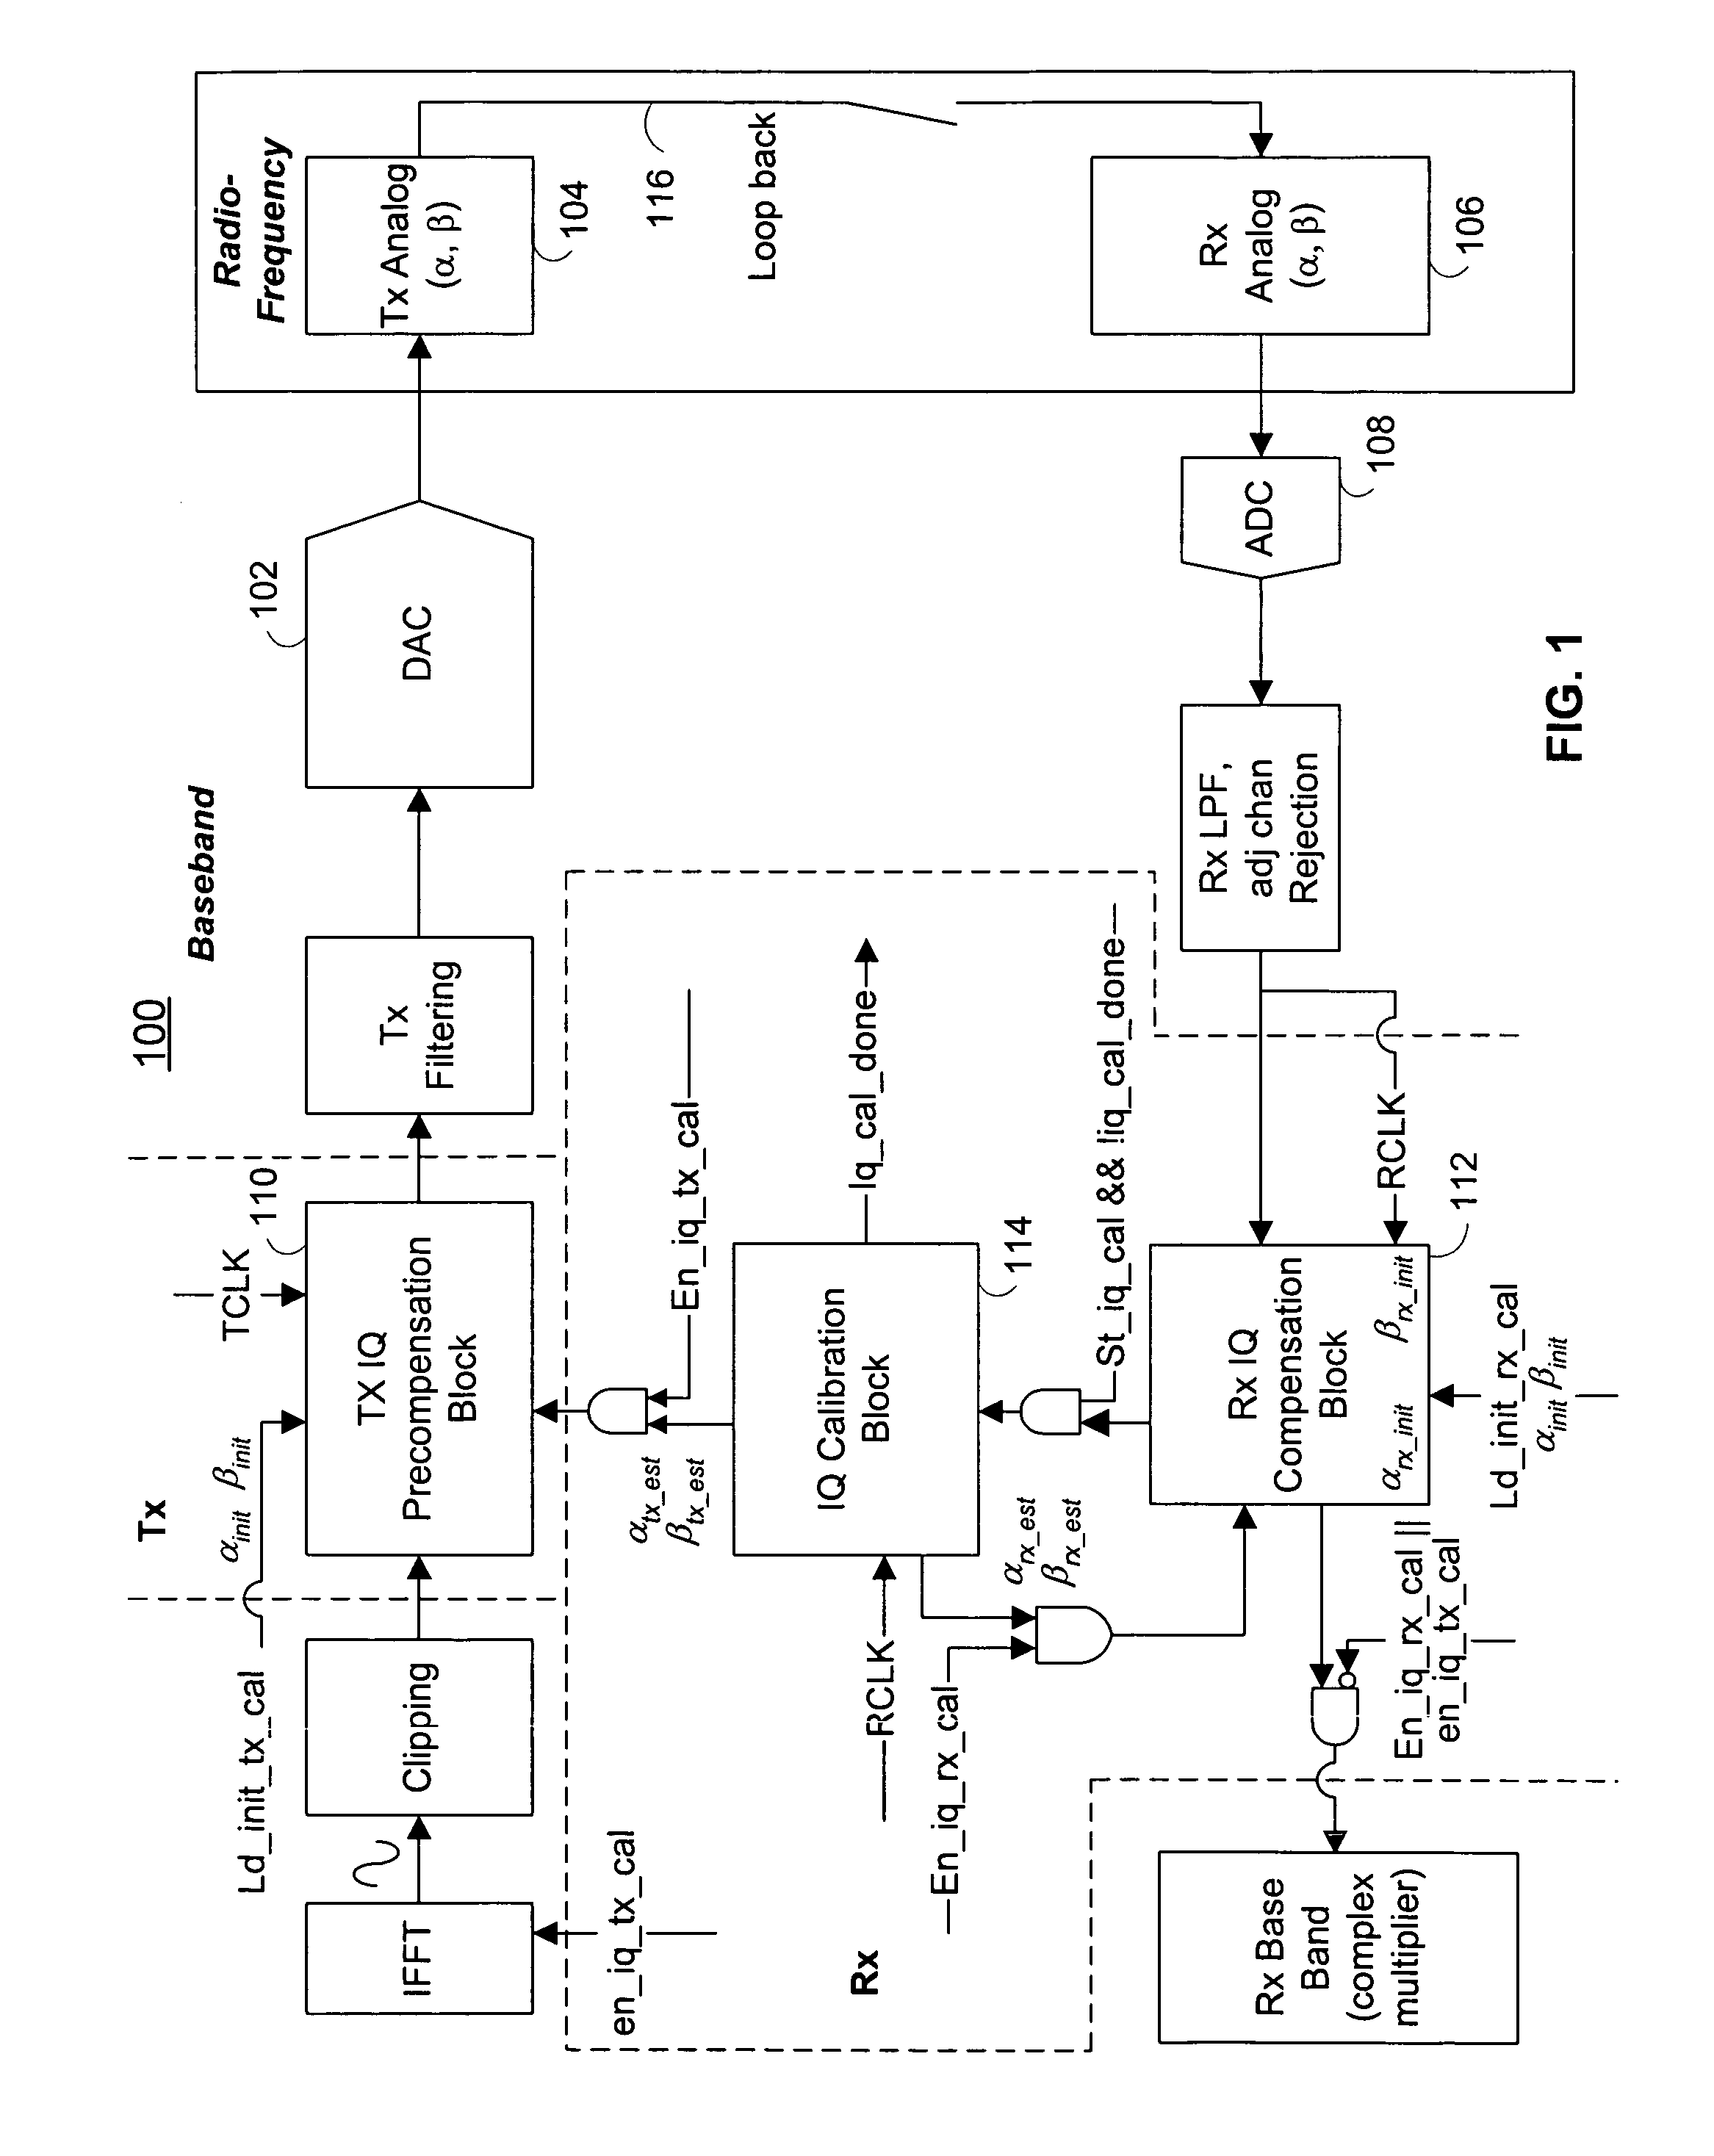 Compensation of I/Q mismatch in a communication system using I/Q modulation